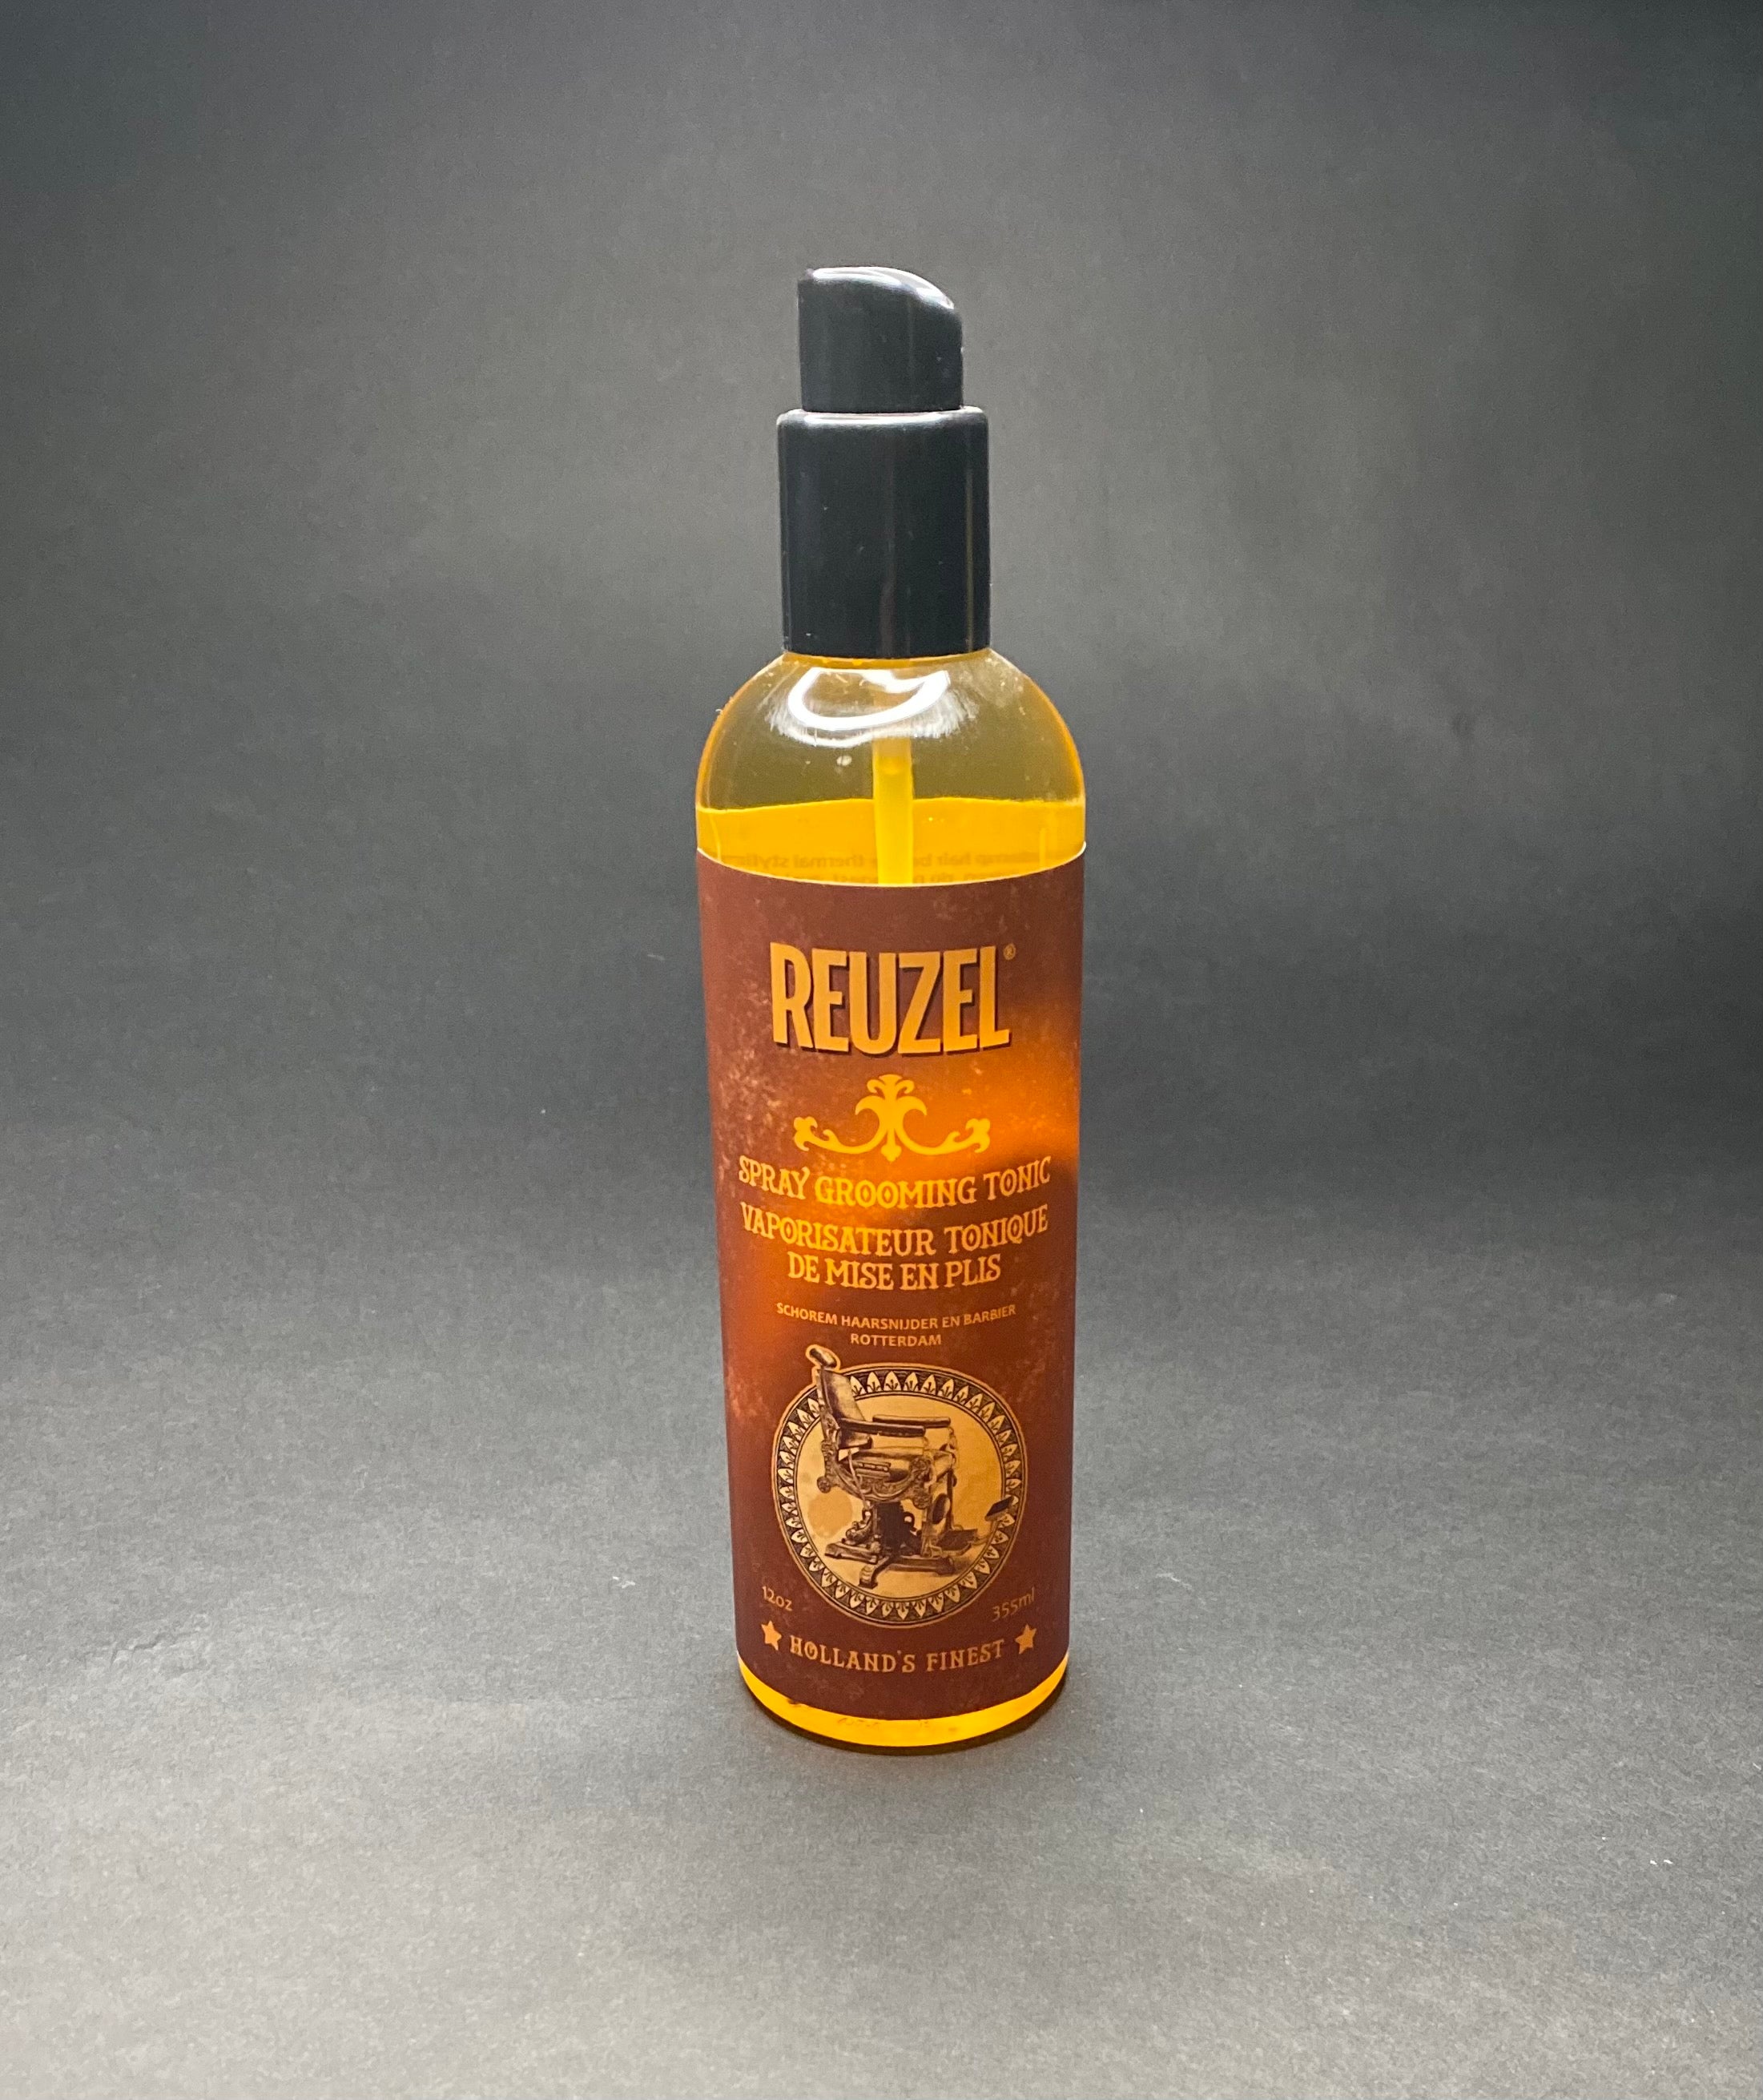 Reuzel Spray Grooming Tonic